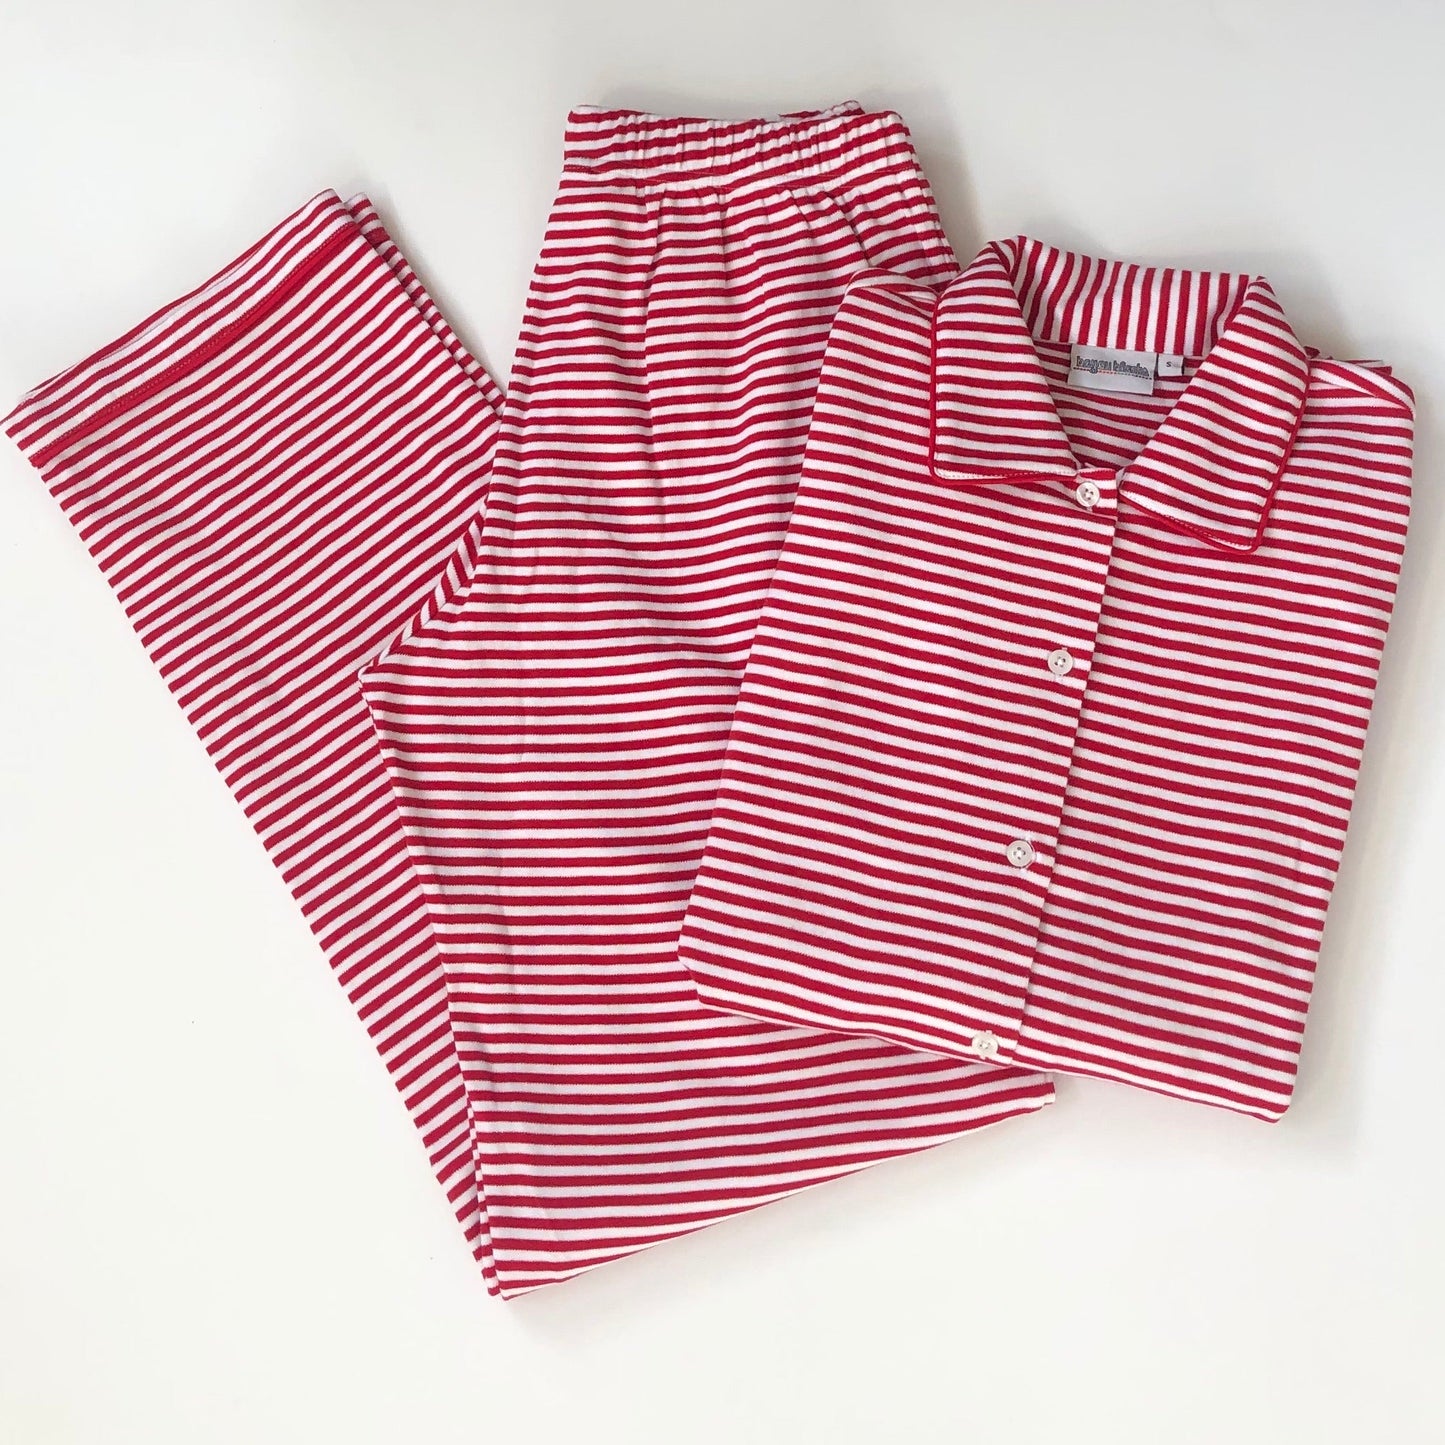 Adult Pajama Set - Red Stripe